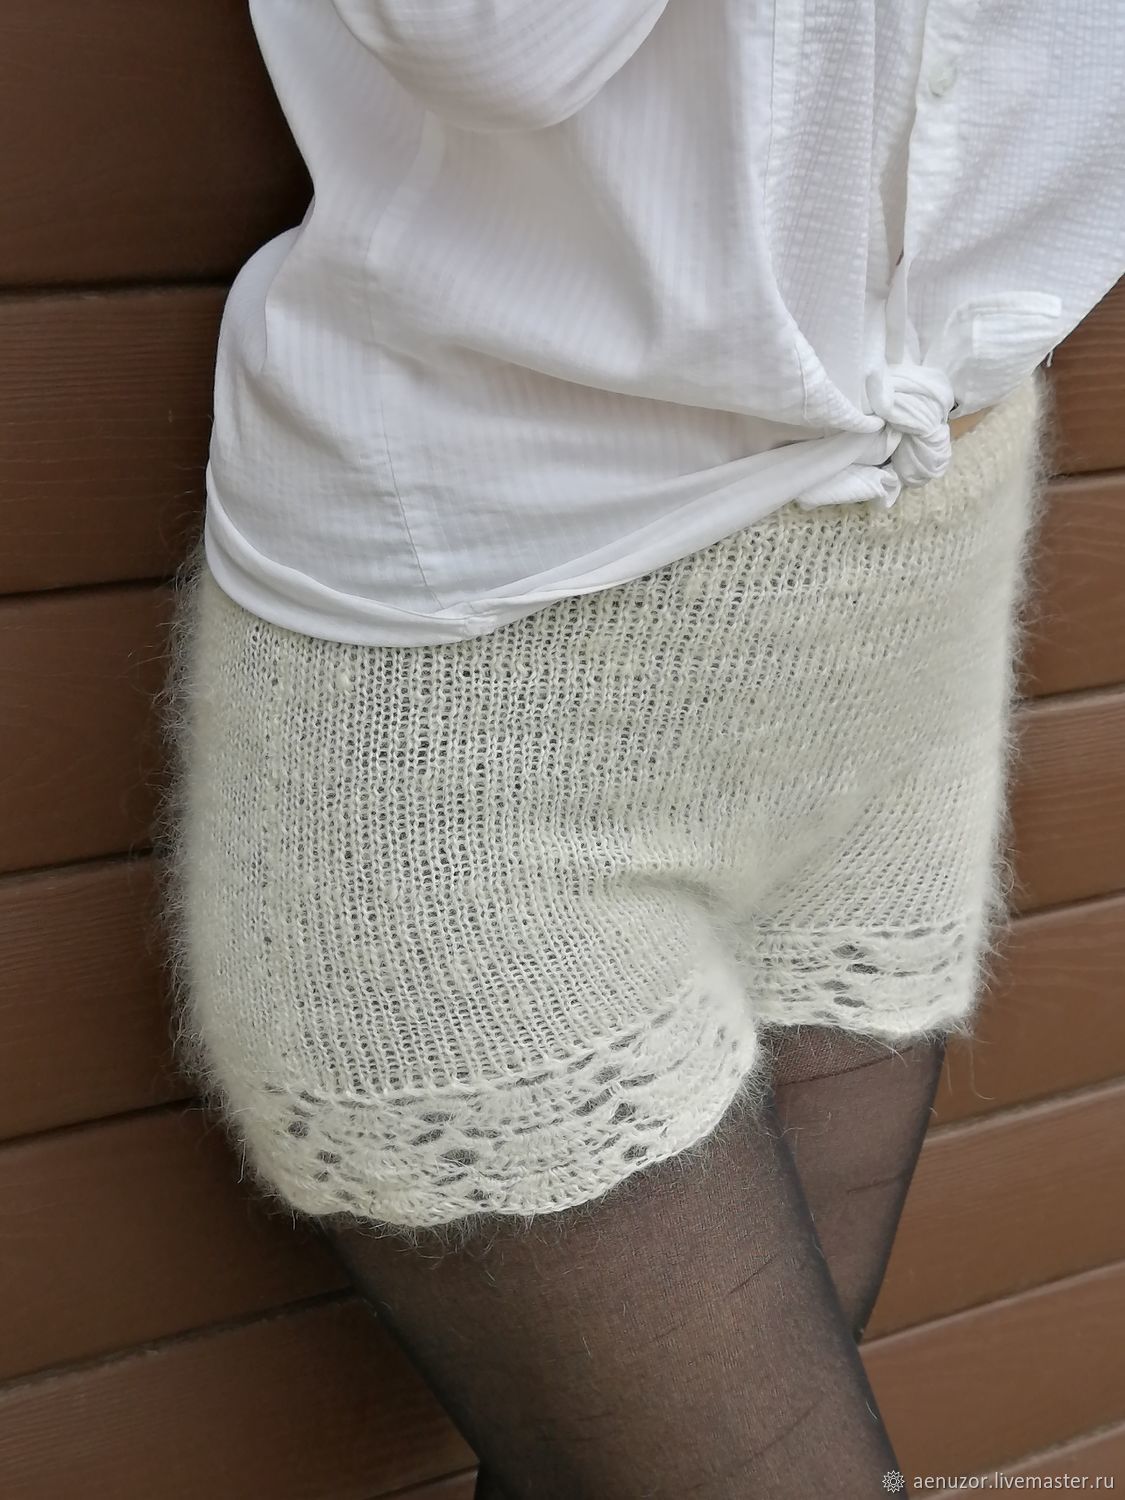 Shorts warm with openwork, Shorts, Urjupinsk,  Фото №1